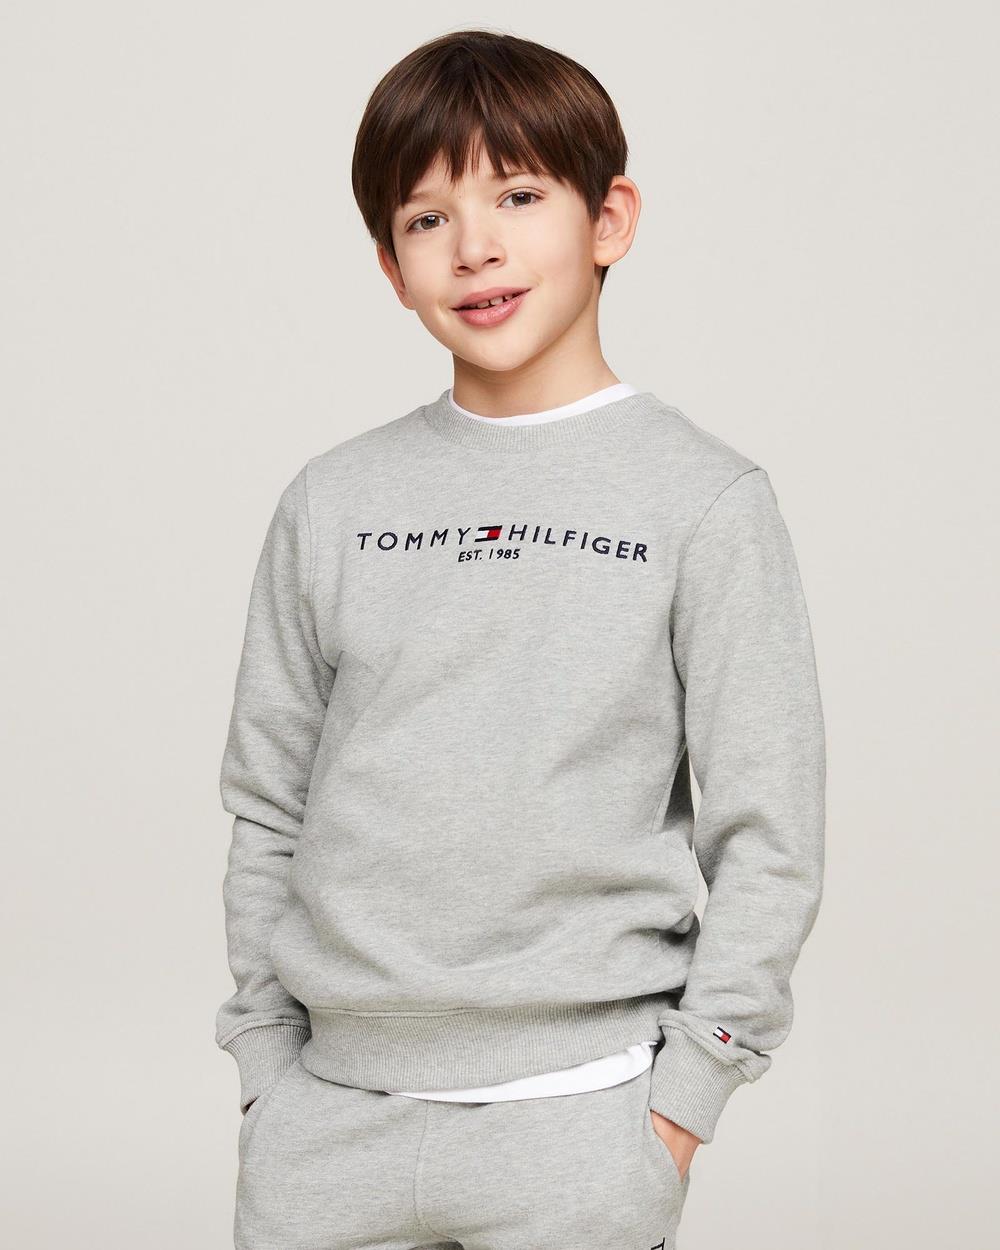 Tommy Hilfiger - Essential Sweatshirt Teens - Sweats (Light Grey Heather) Essential Sweatshirt - Teens